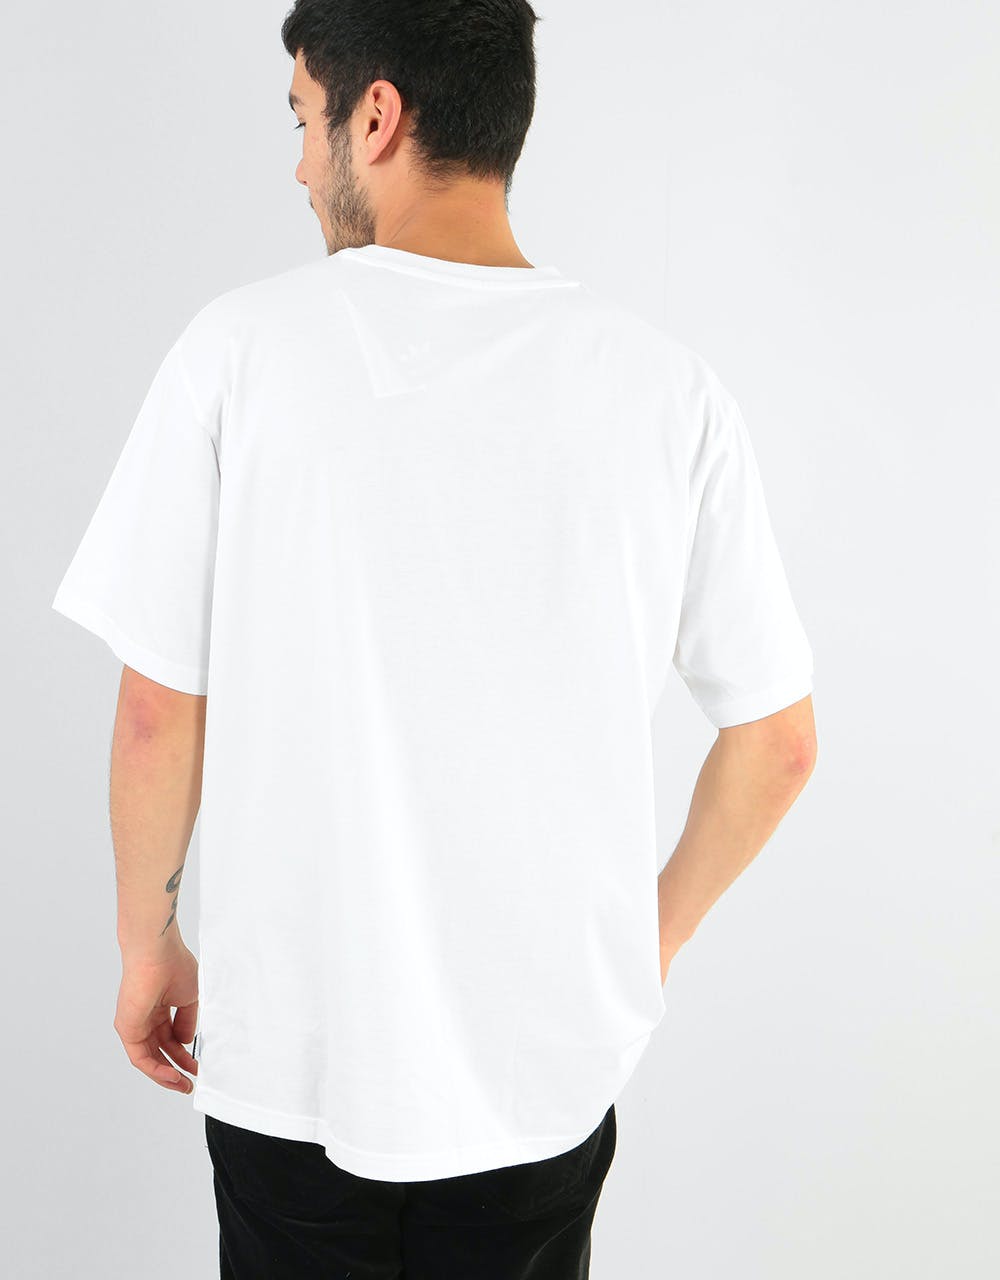 Adidas Split T-Shirt - White/Multicolour